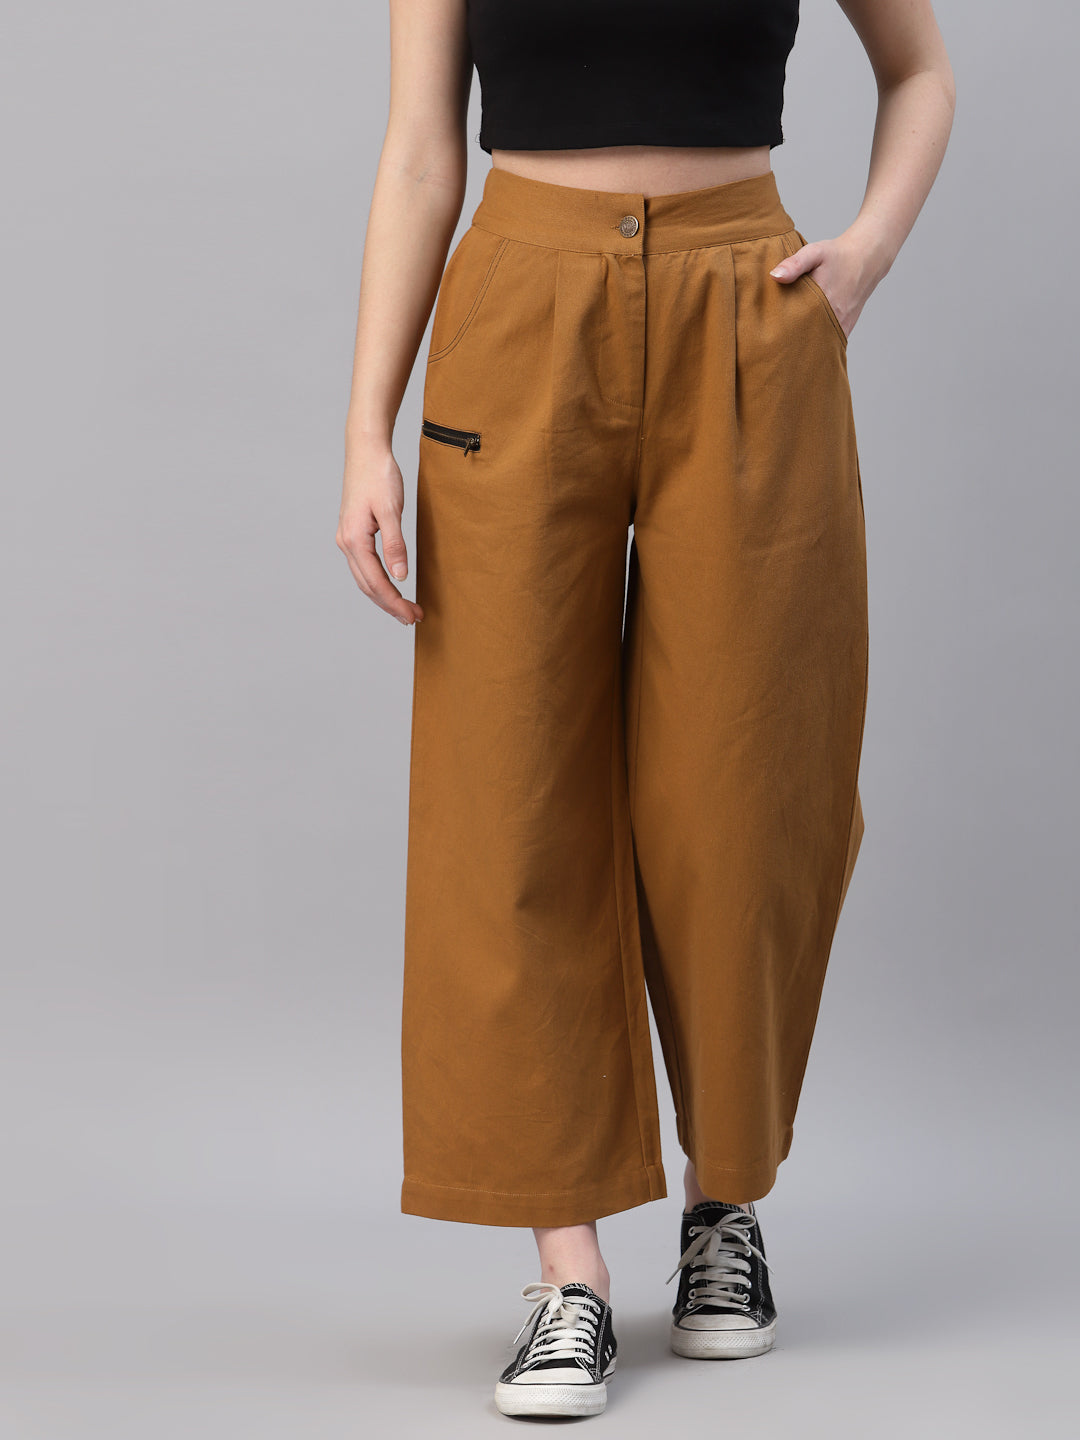 Mocha Brown Linen Half Sleeves Shirt For Women – LININ